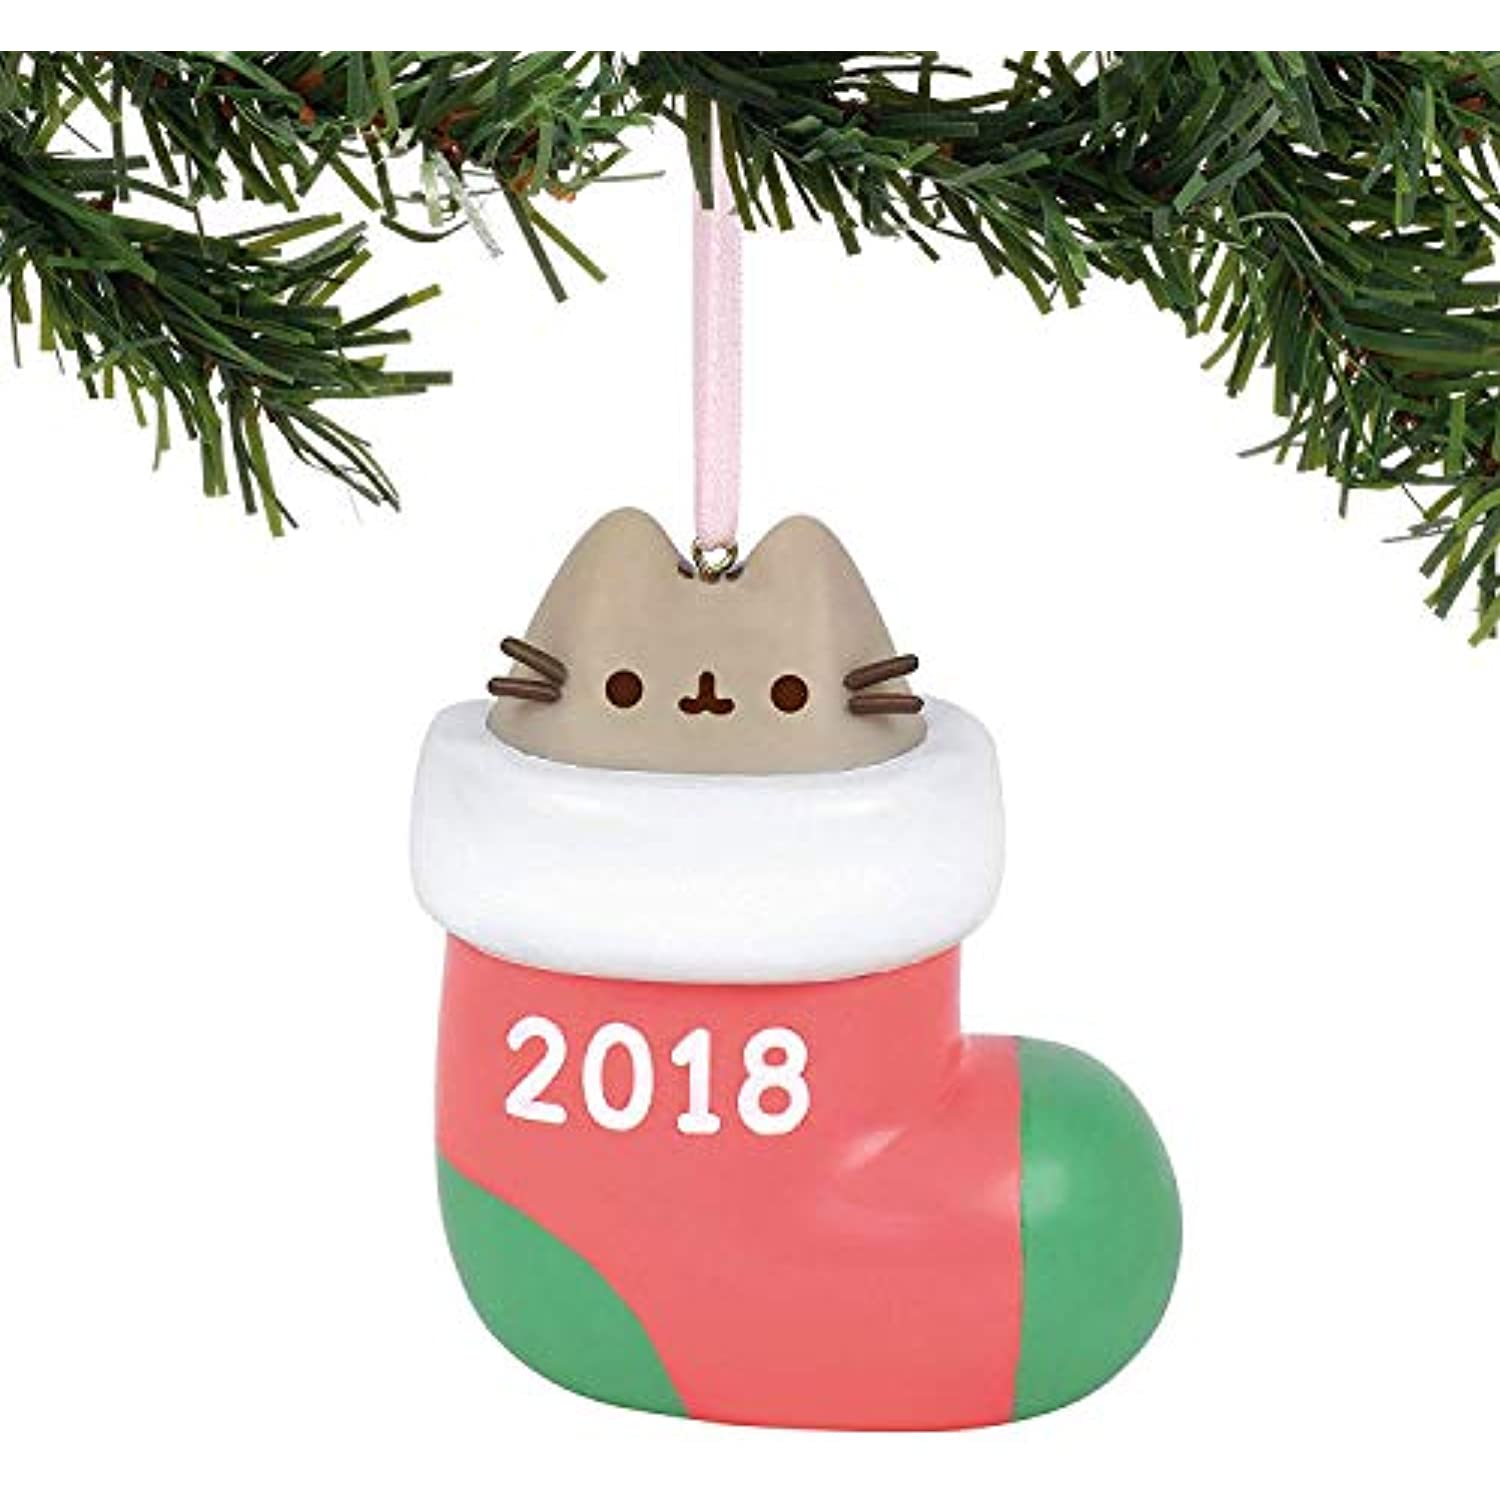 GUND Festive 11" Pusheen Stocking Bundle with 3.5" 2018 Stocking Ornament